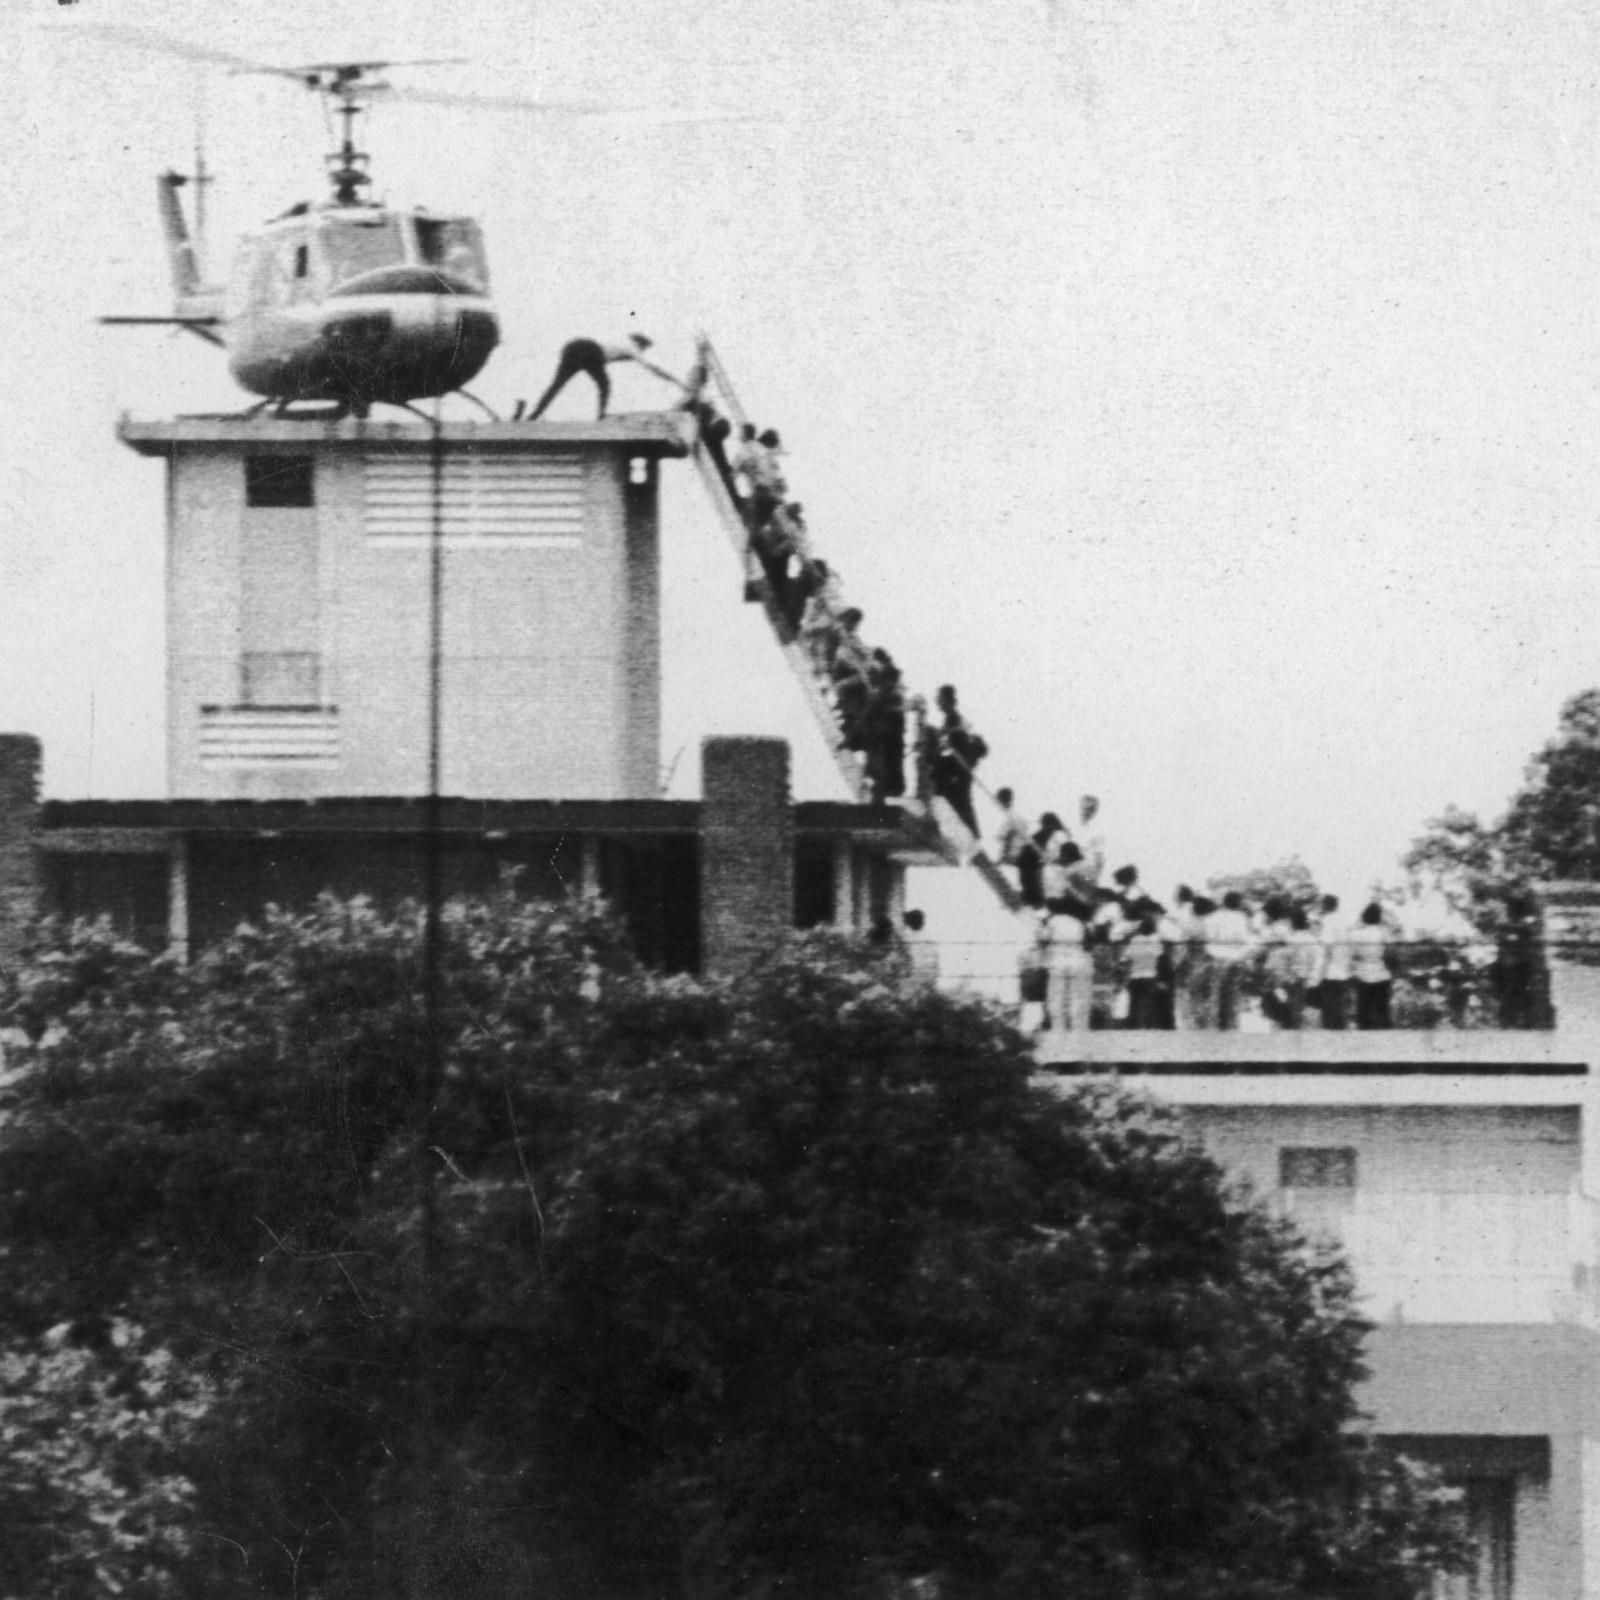 The Last Helicopter: Evacuating Saigon